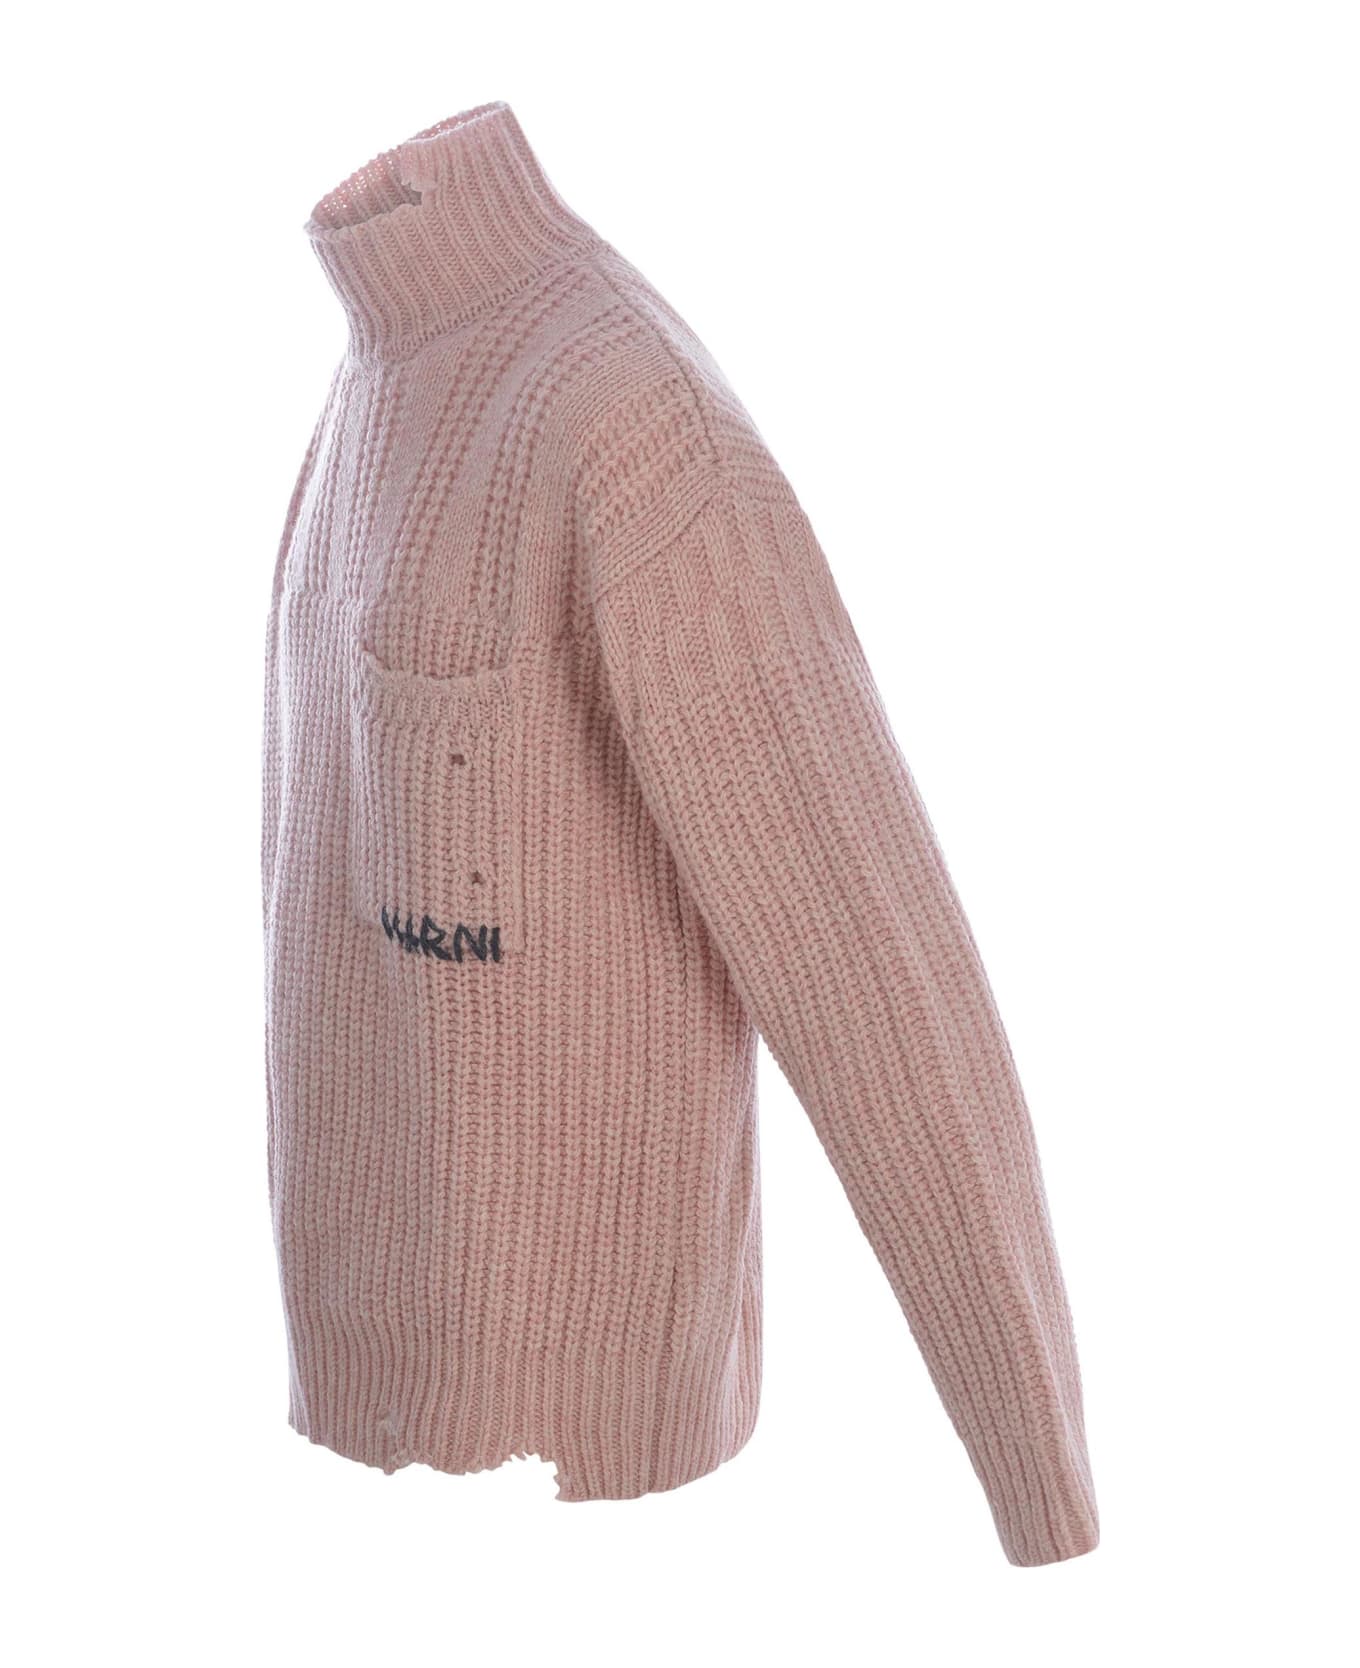 Marni Sweater Marni Made Of Virgin Wool - Rosa ニットウェア